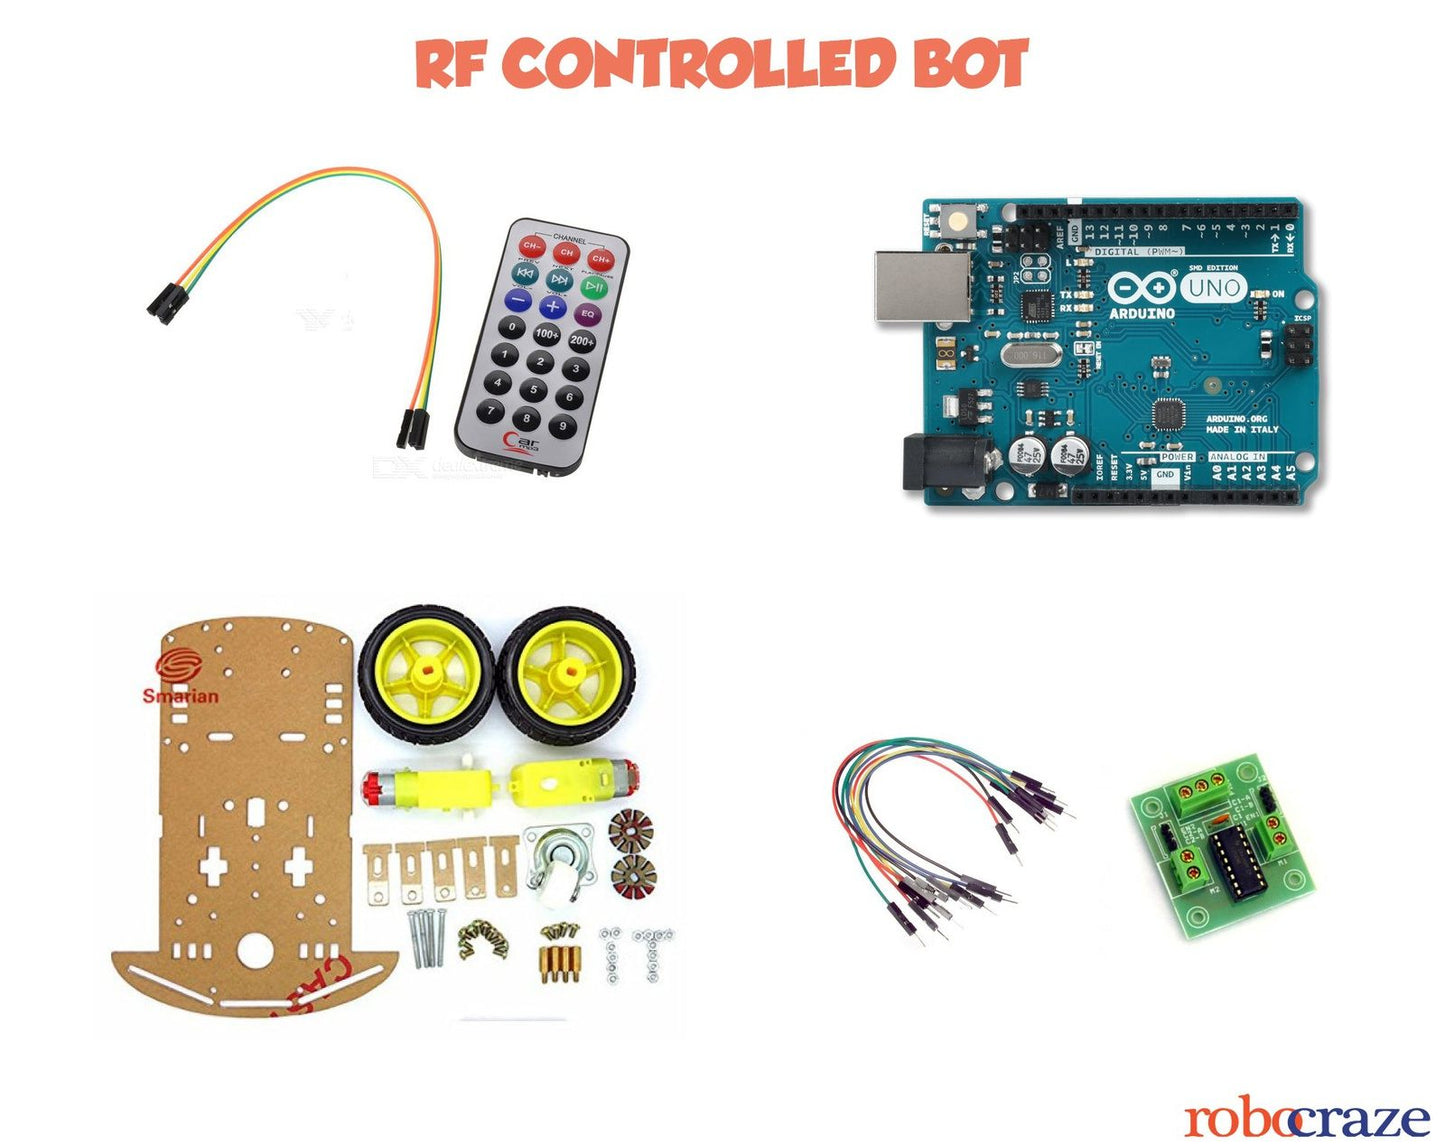 RF controlled BOT-Robocraze